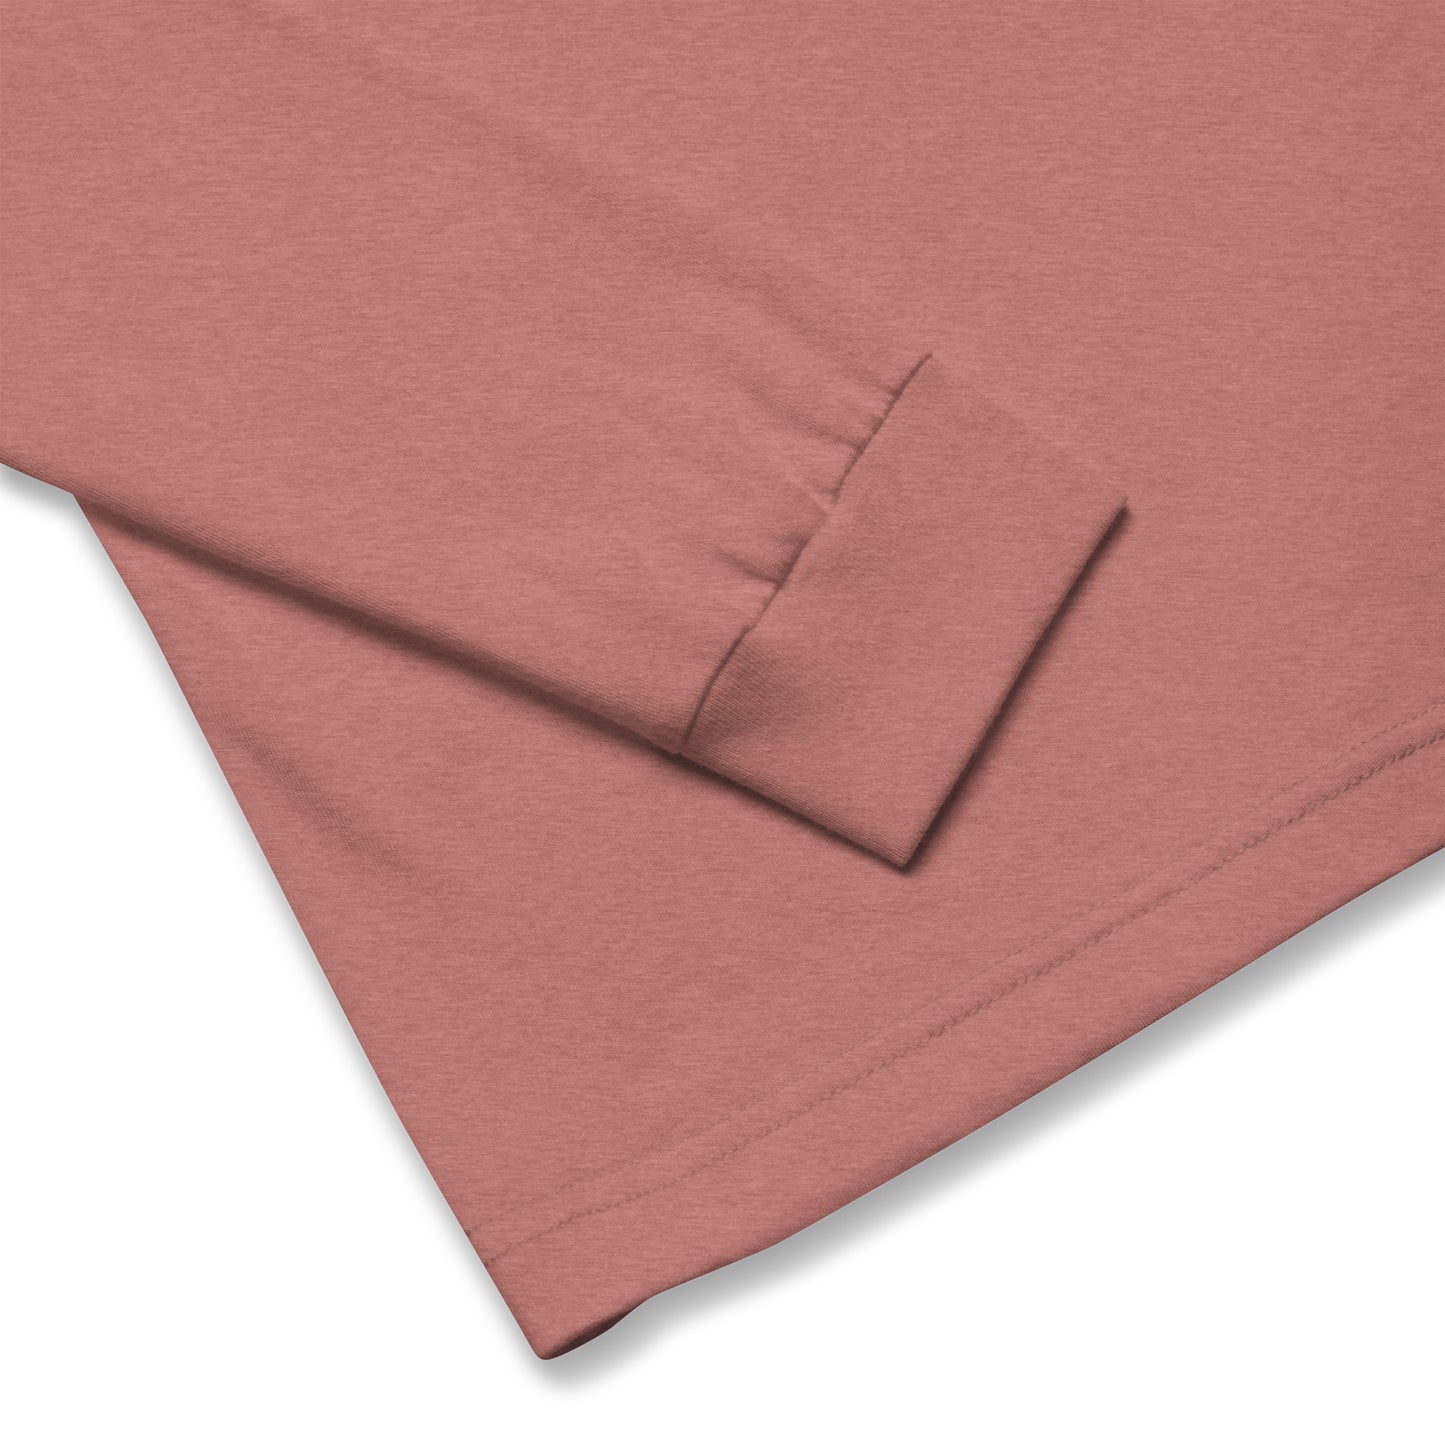 Women's Long Sleeve T-Shirt